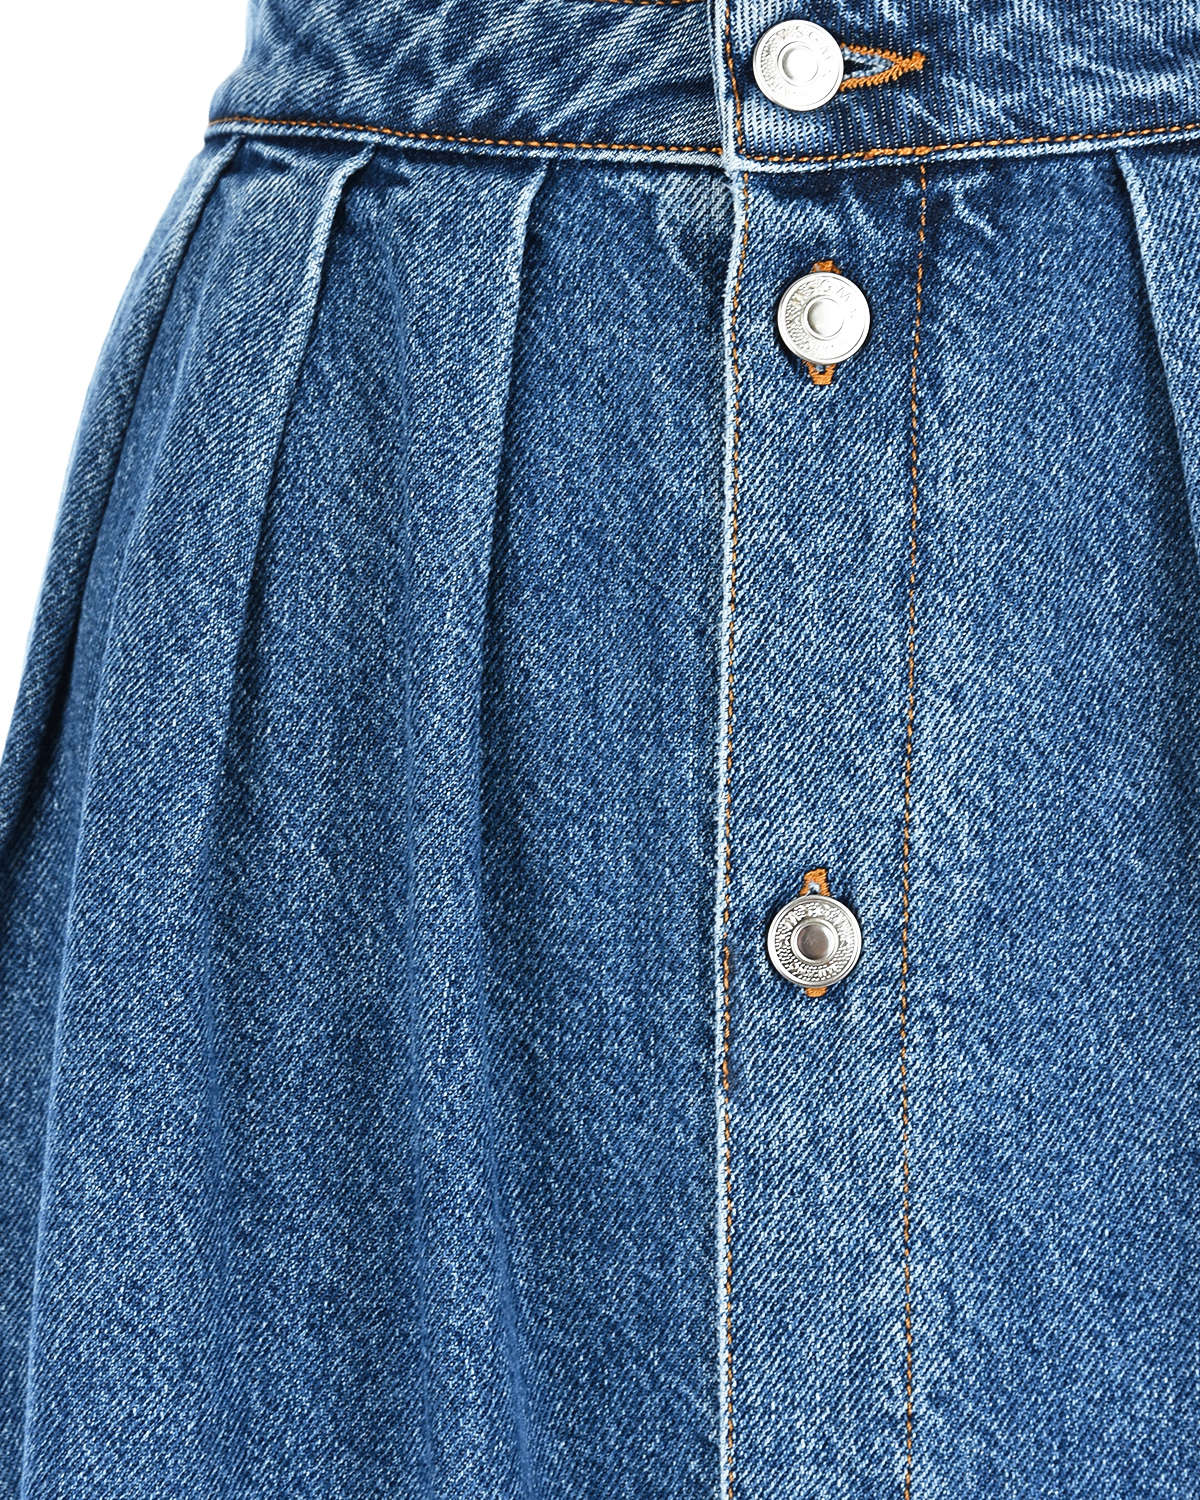 Синяя джинсовая юбка MSGM, размер 40, цвет синий - фото 6